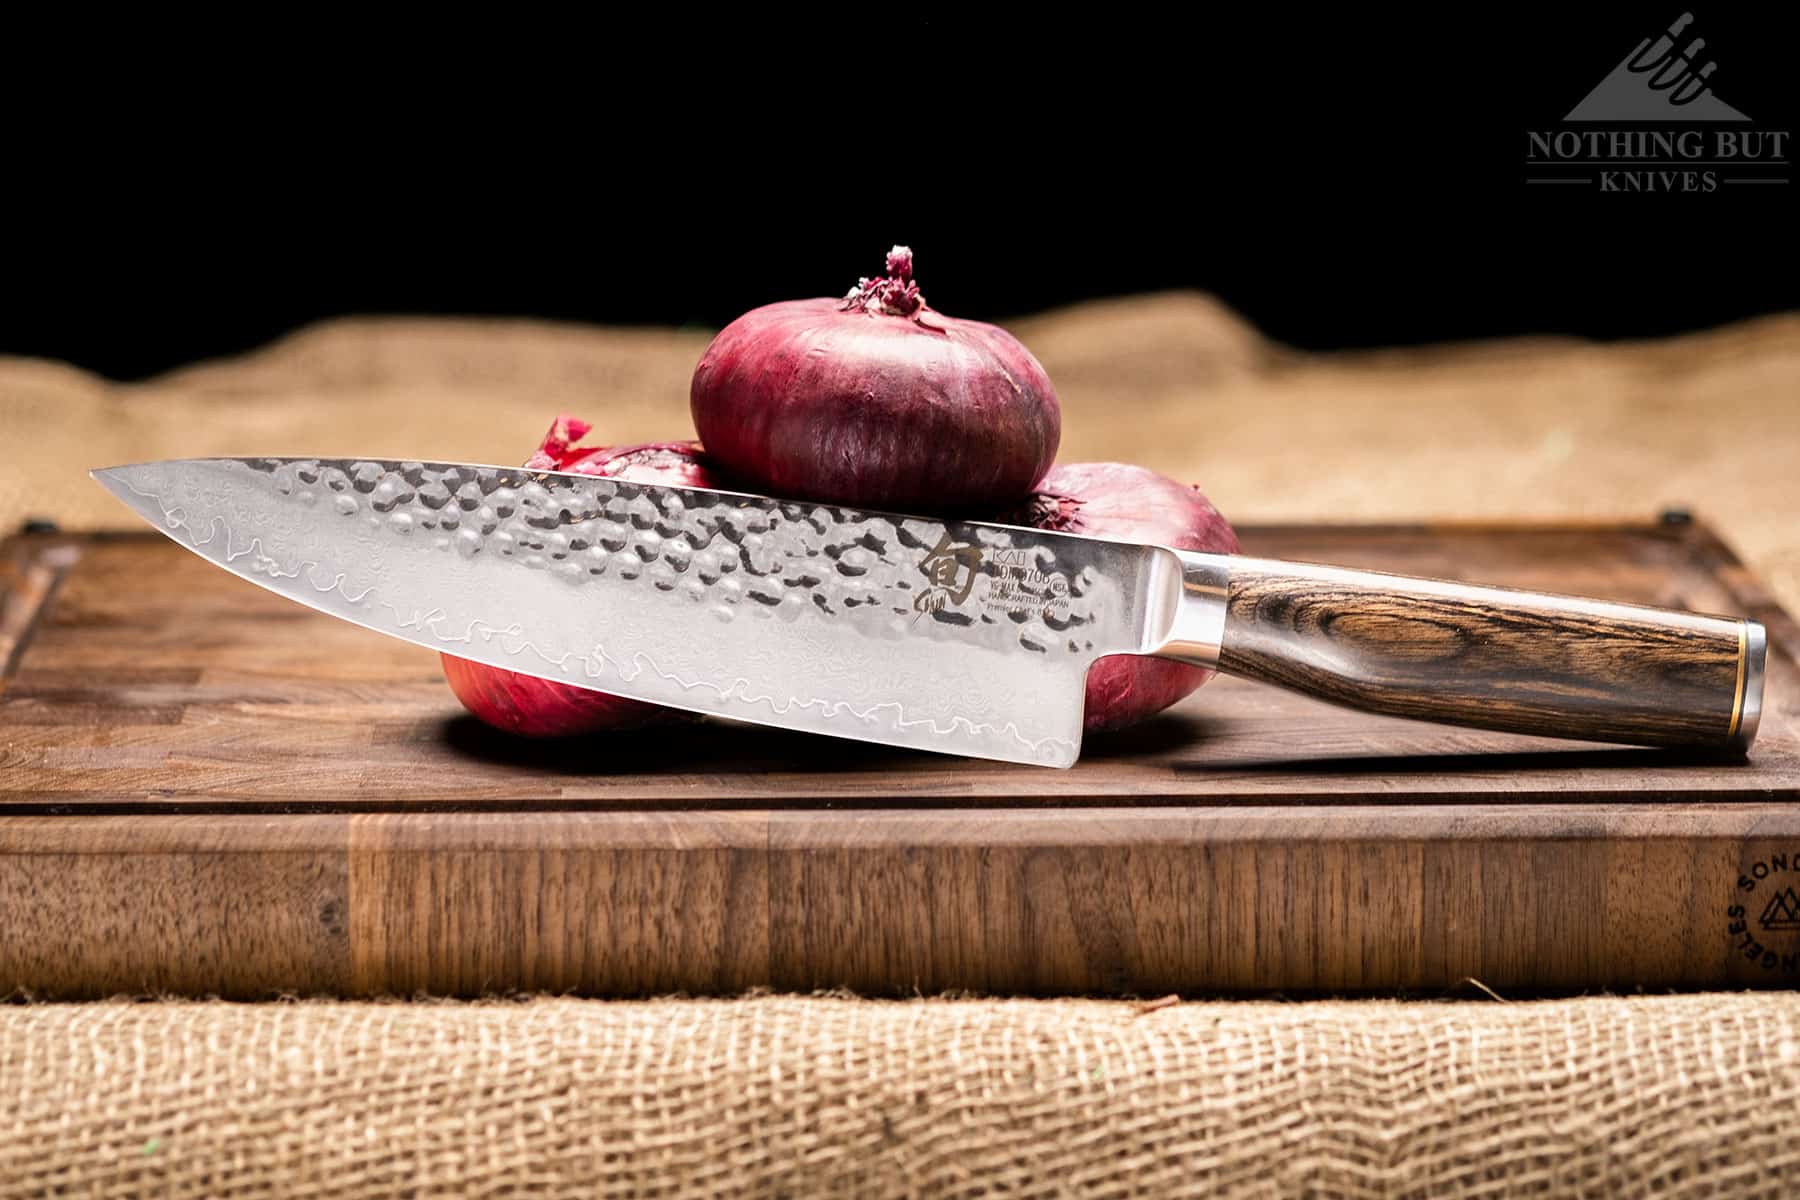 Shun Premier Chef's Knife Review